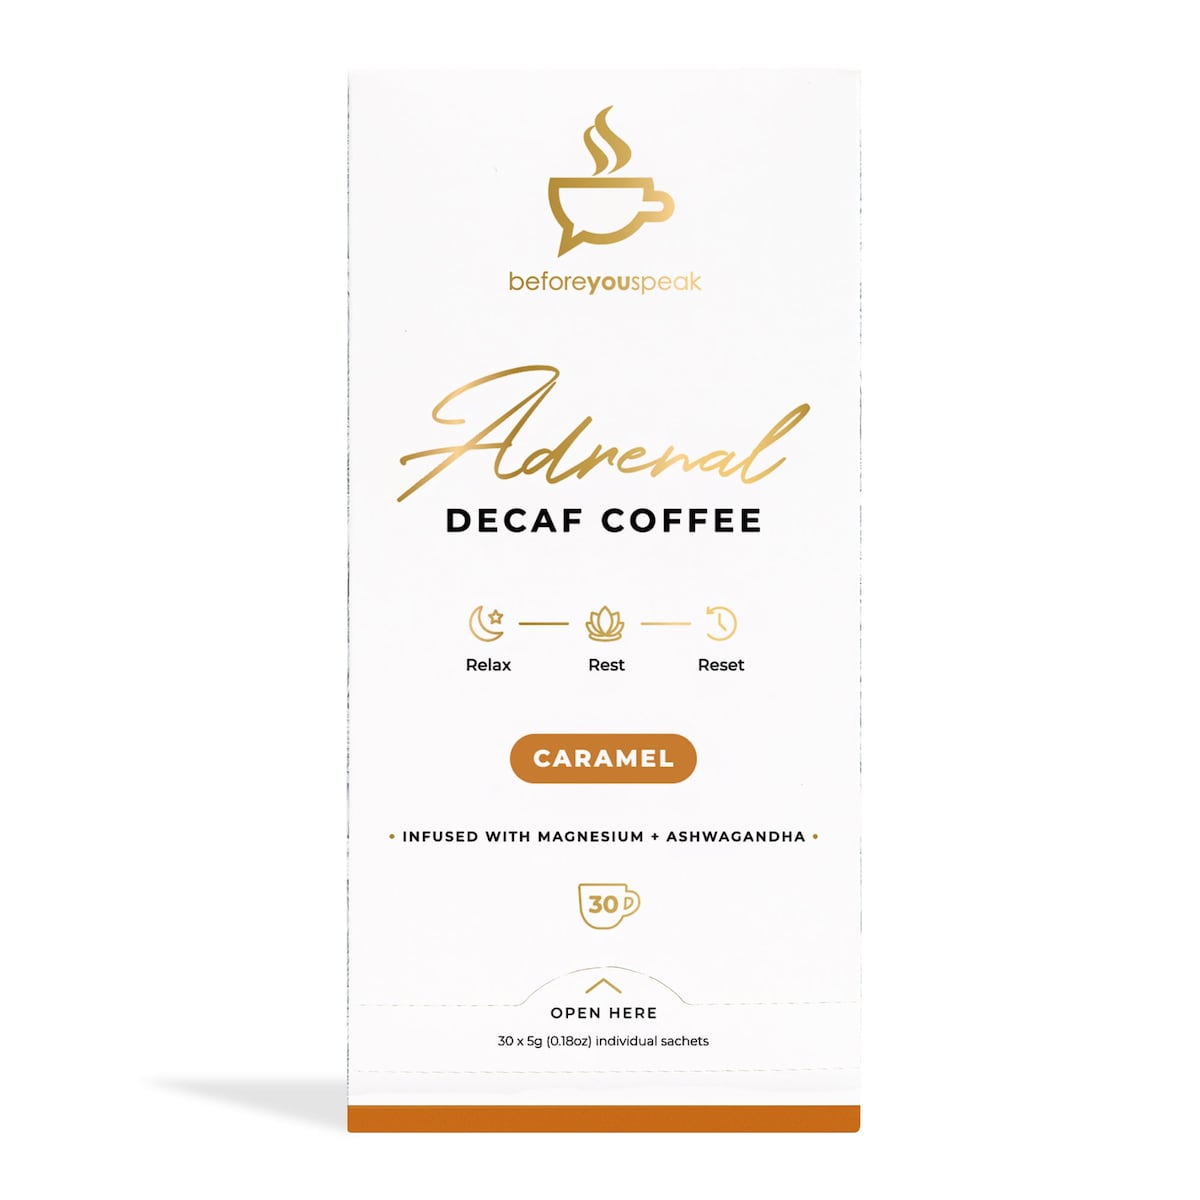 Beforeyouspeak Coffee Adrenal Decaf Blend Caramel 30 x 5g